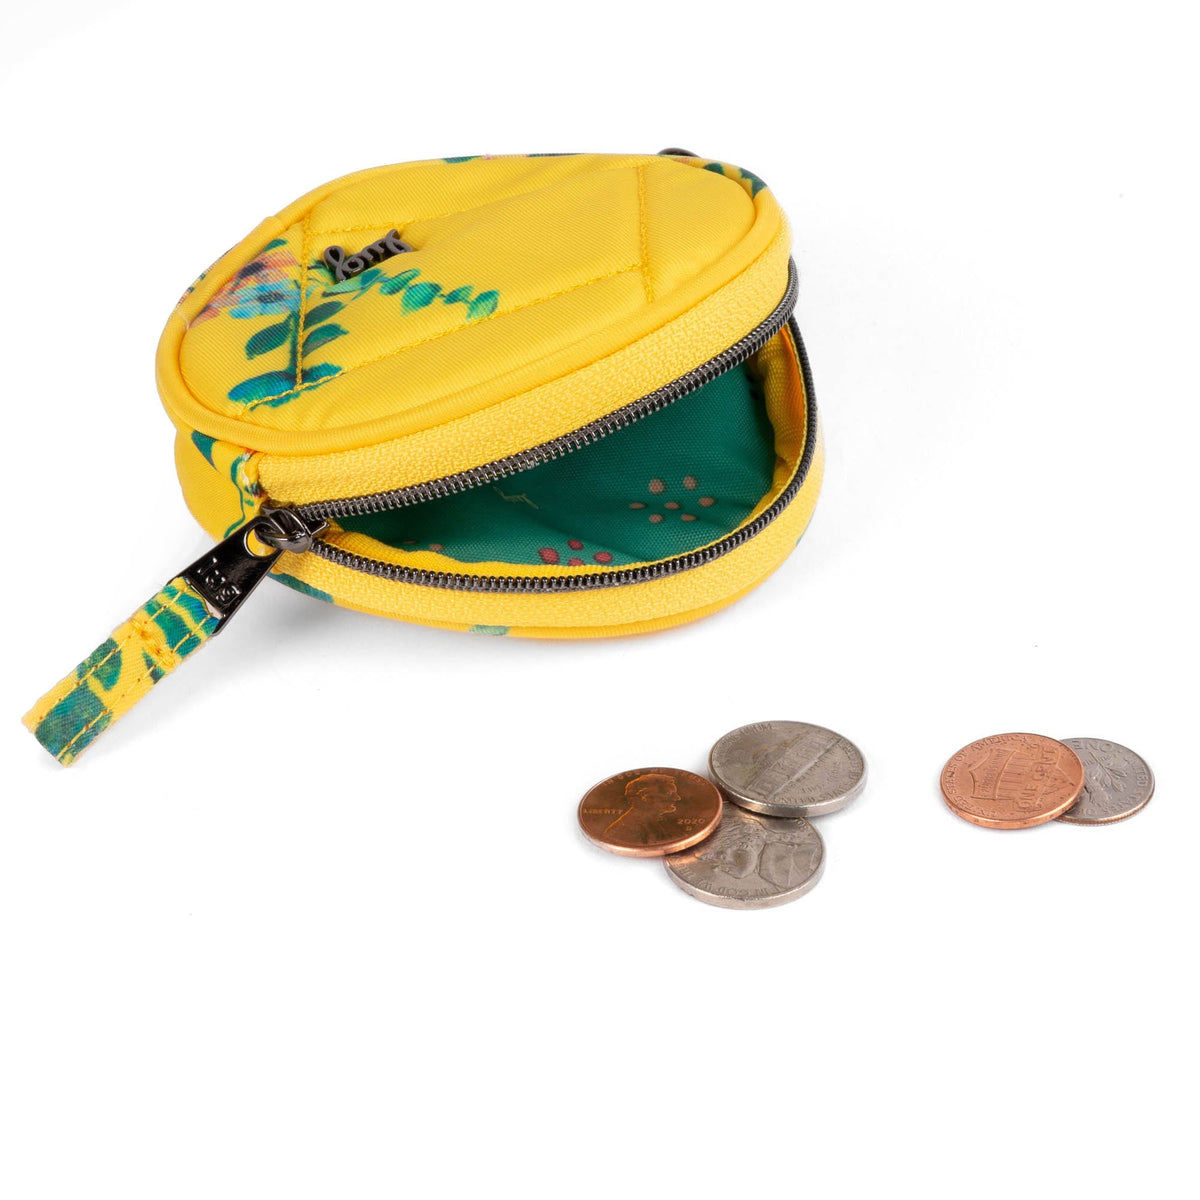 Multifunctional Mini Coin Bag, Coin Bags, Coin Pouches, सिक्के रखने का बटुआ  - Platform 65, Hyderabad | ID: 2852652496373